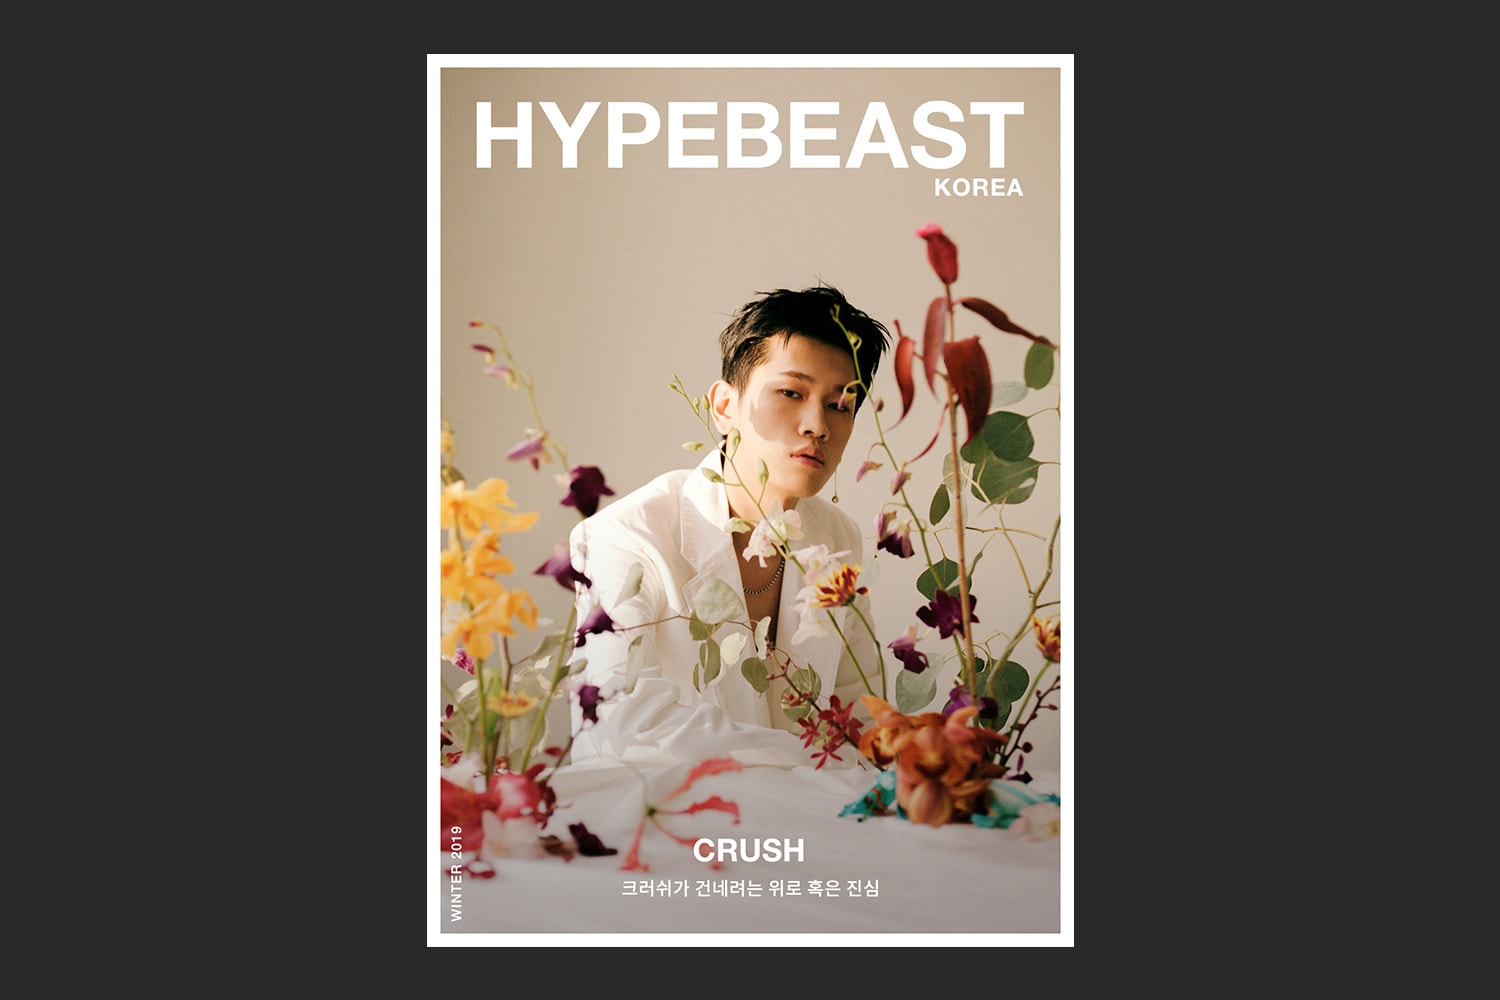 Crush A Consolation Through Music South Korean Hip Hop Artist Korea Digital Cover Interview